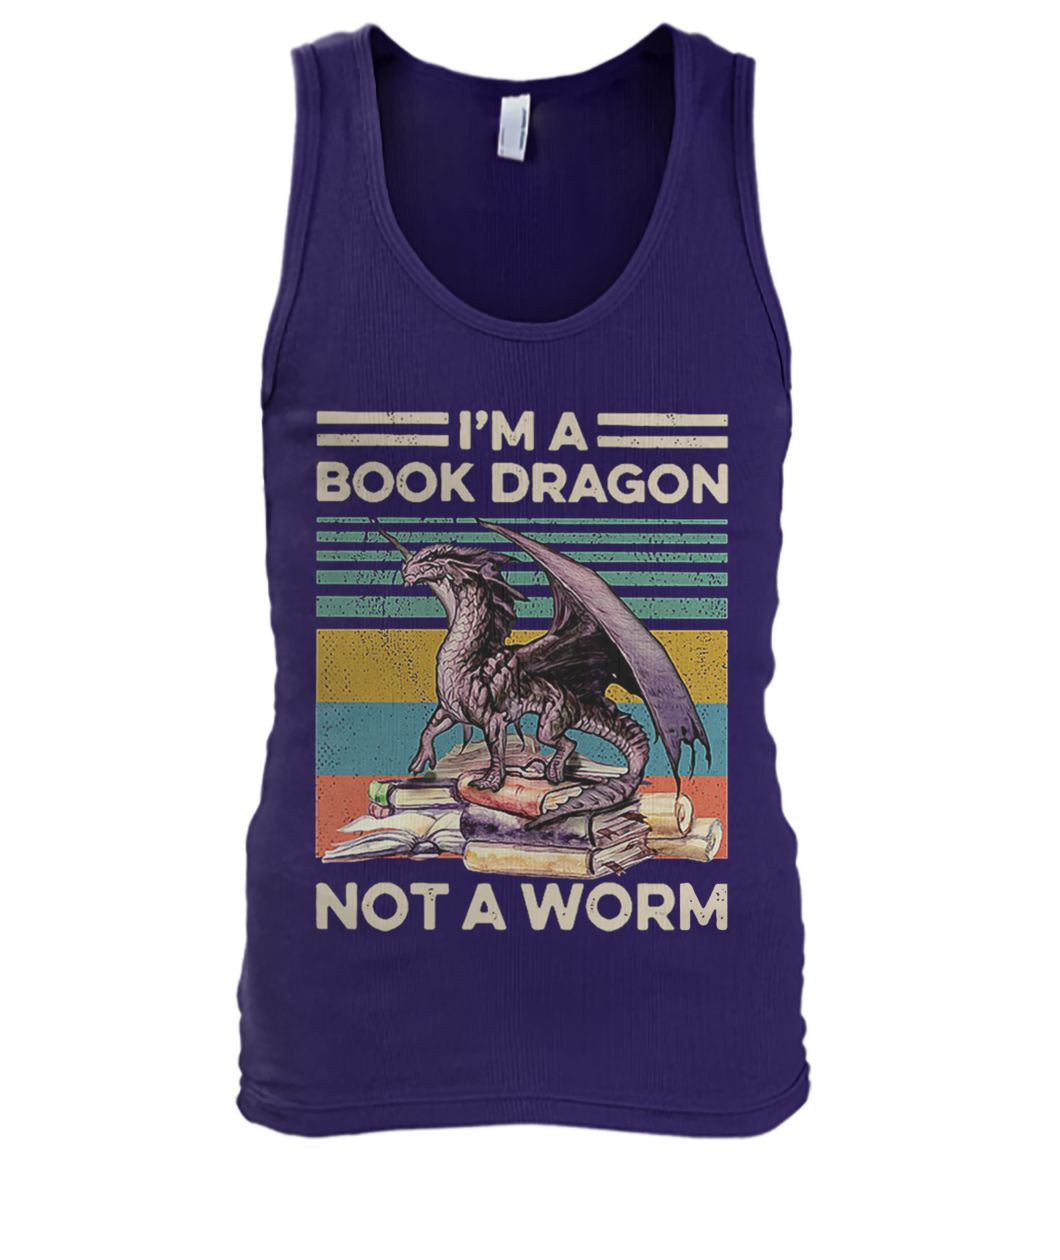 I'm a book dragon not a worm vintage men's tank top